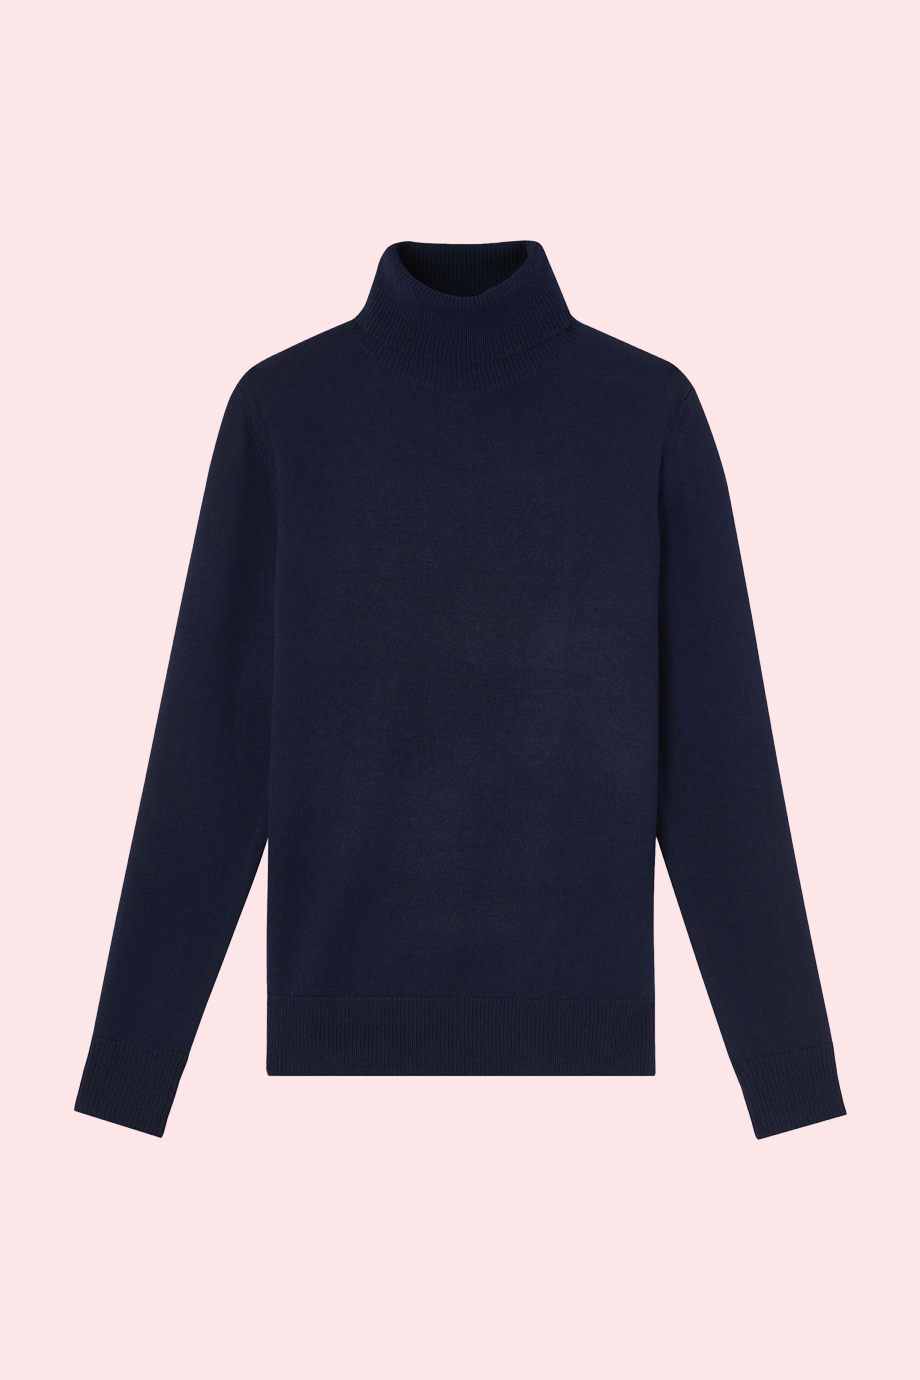 A.P.C. sweater Sandra dark navy product